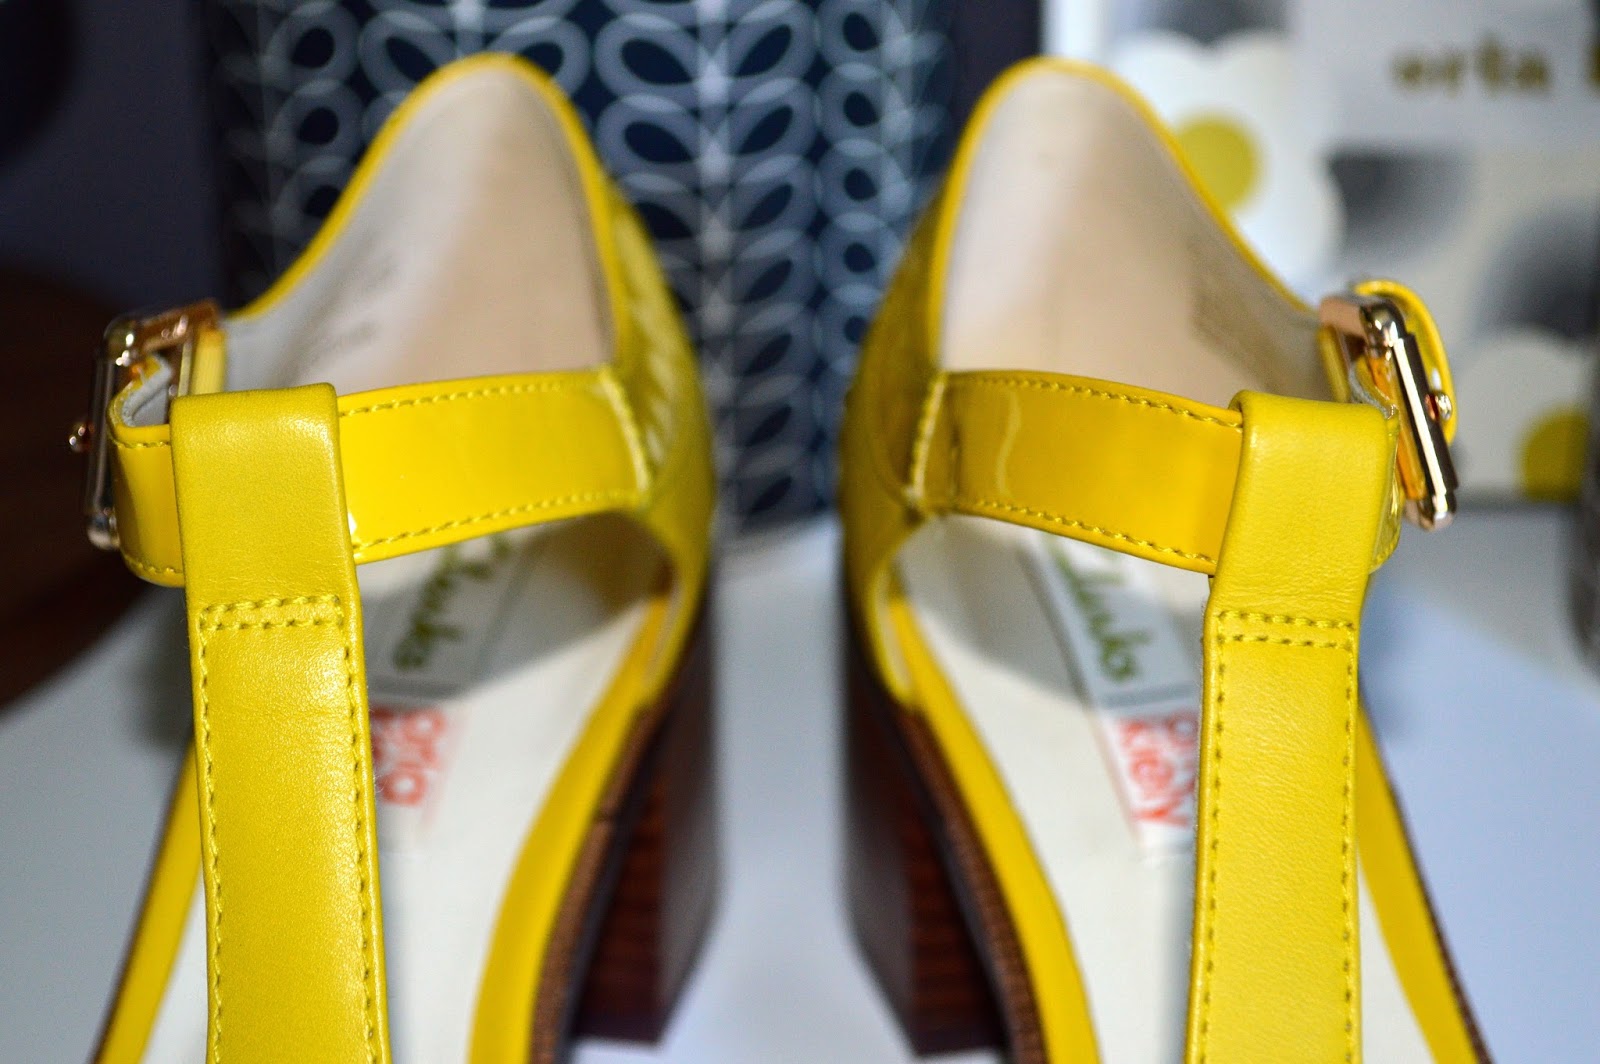 I Love Orla Kiely: Haul + Review: Orla Kiely for Clarks Bibi Shoes